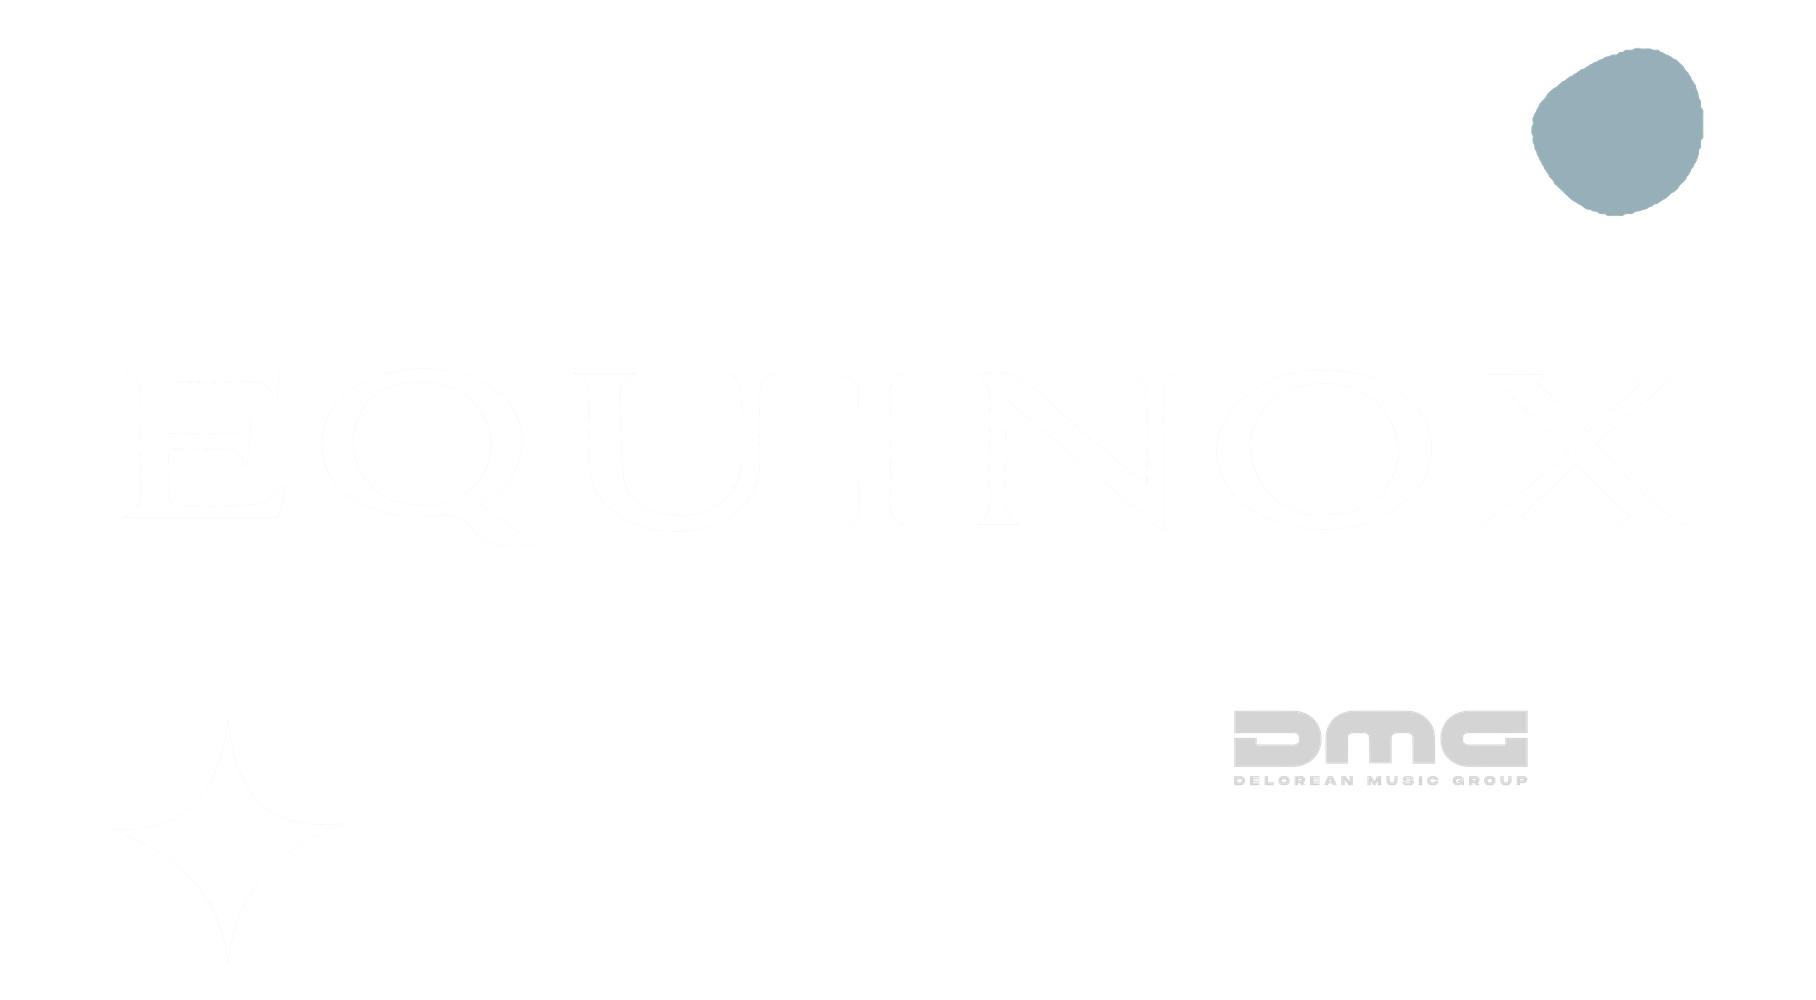 Equinox studios